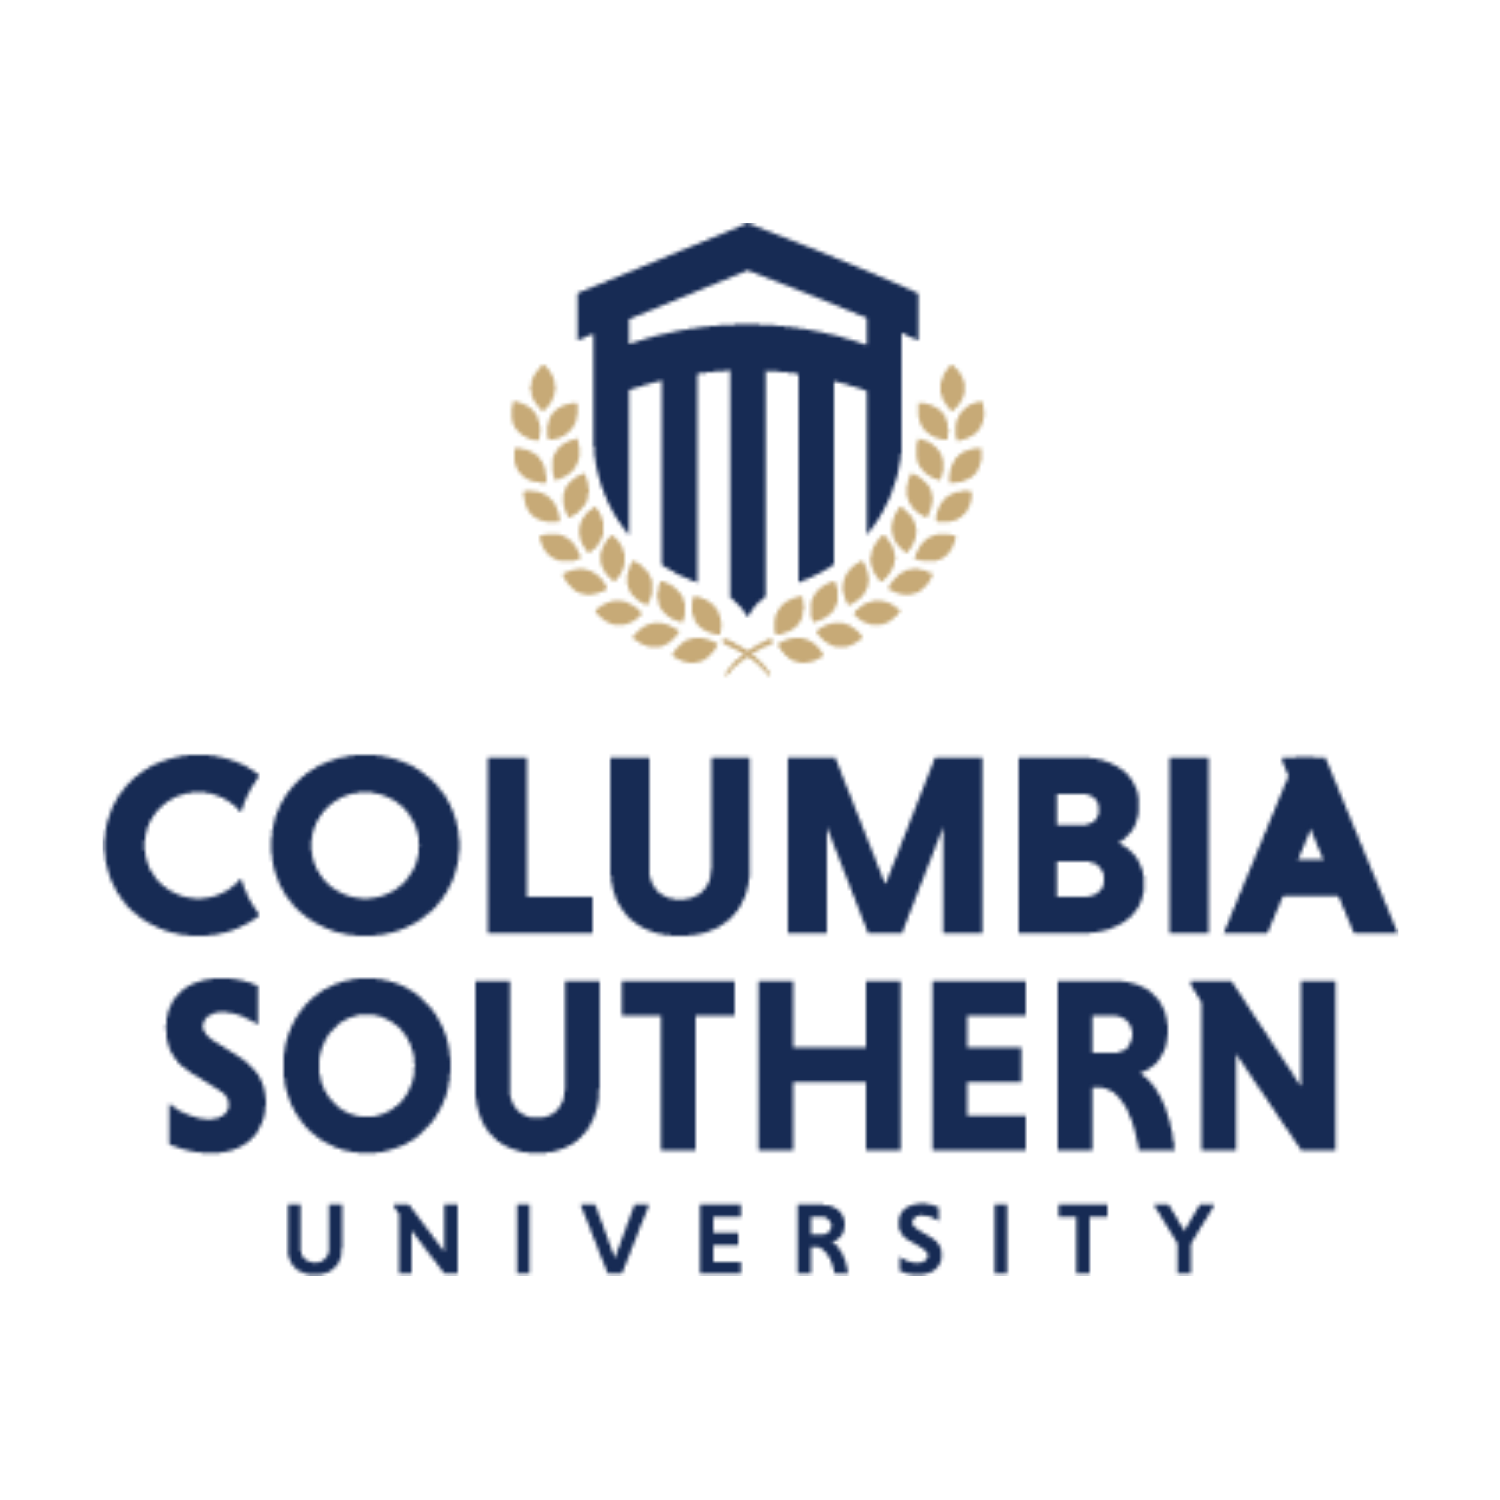 Columbia southern university logo website 1